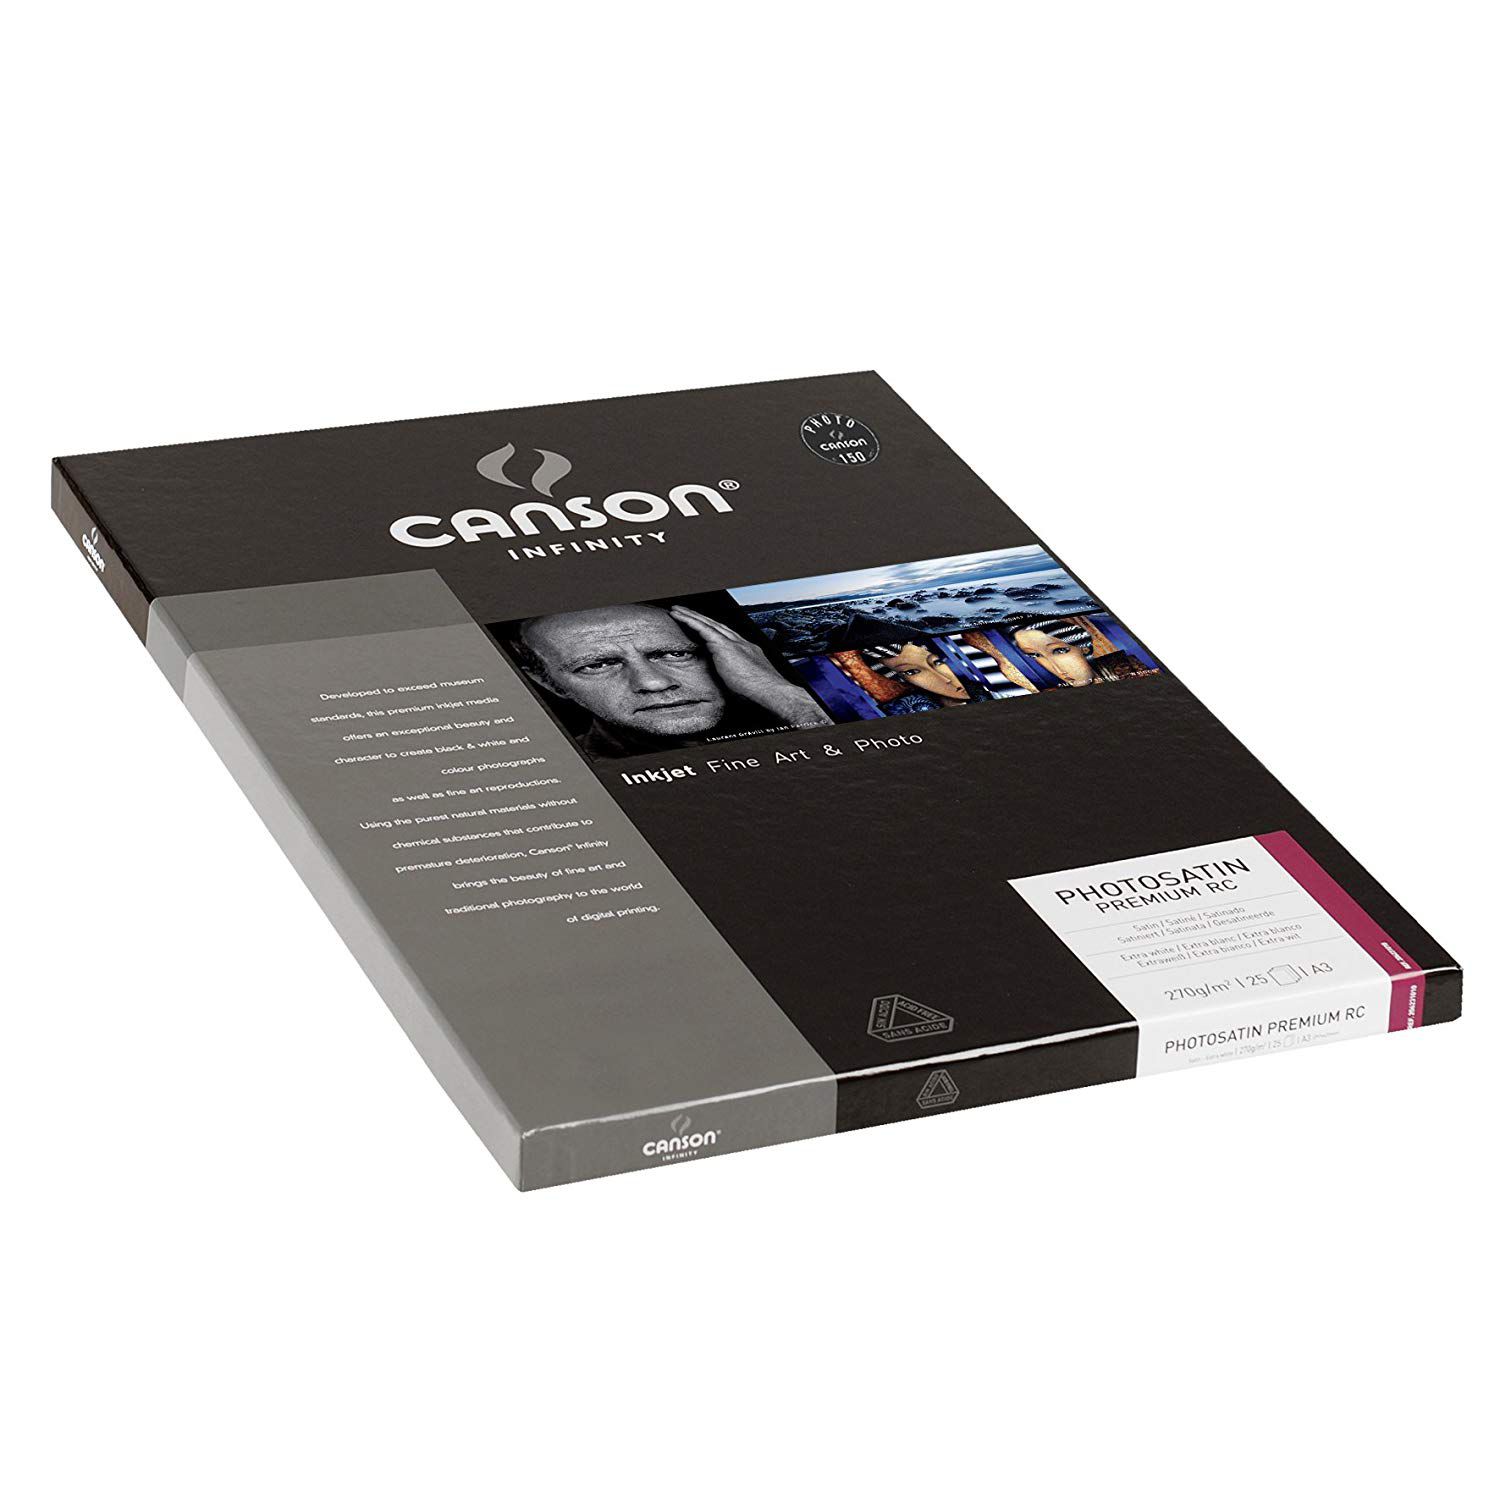 Canson® Infinity PhotoSatin Premium RC 270 g/m²